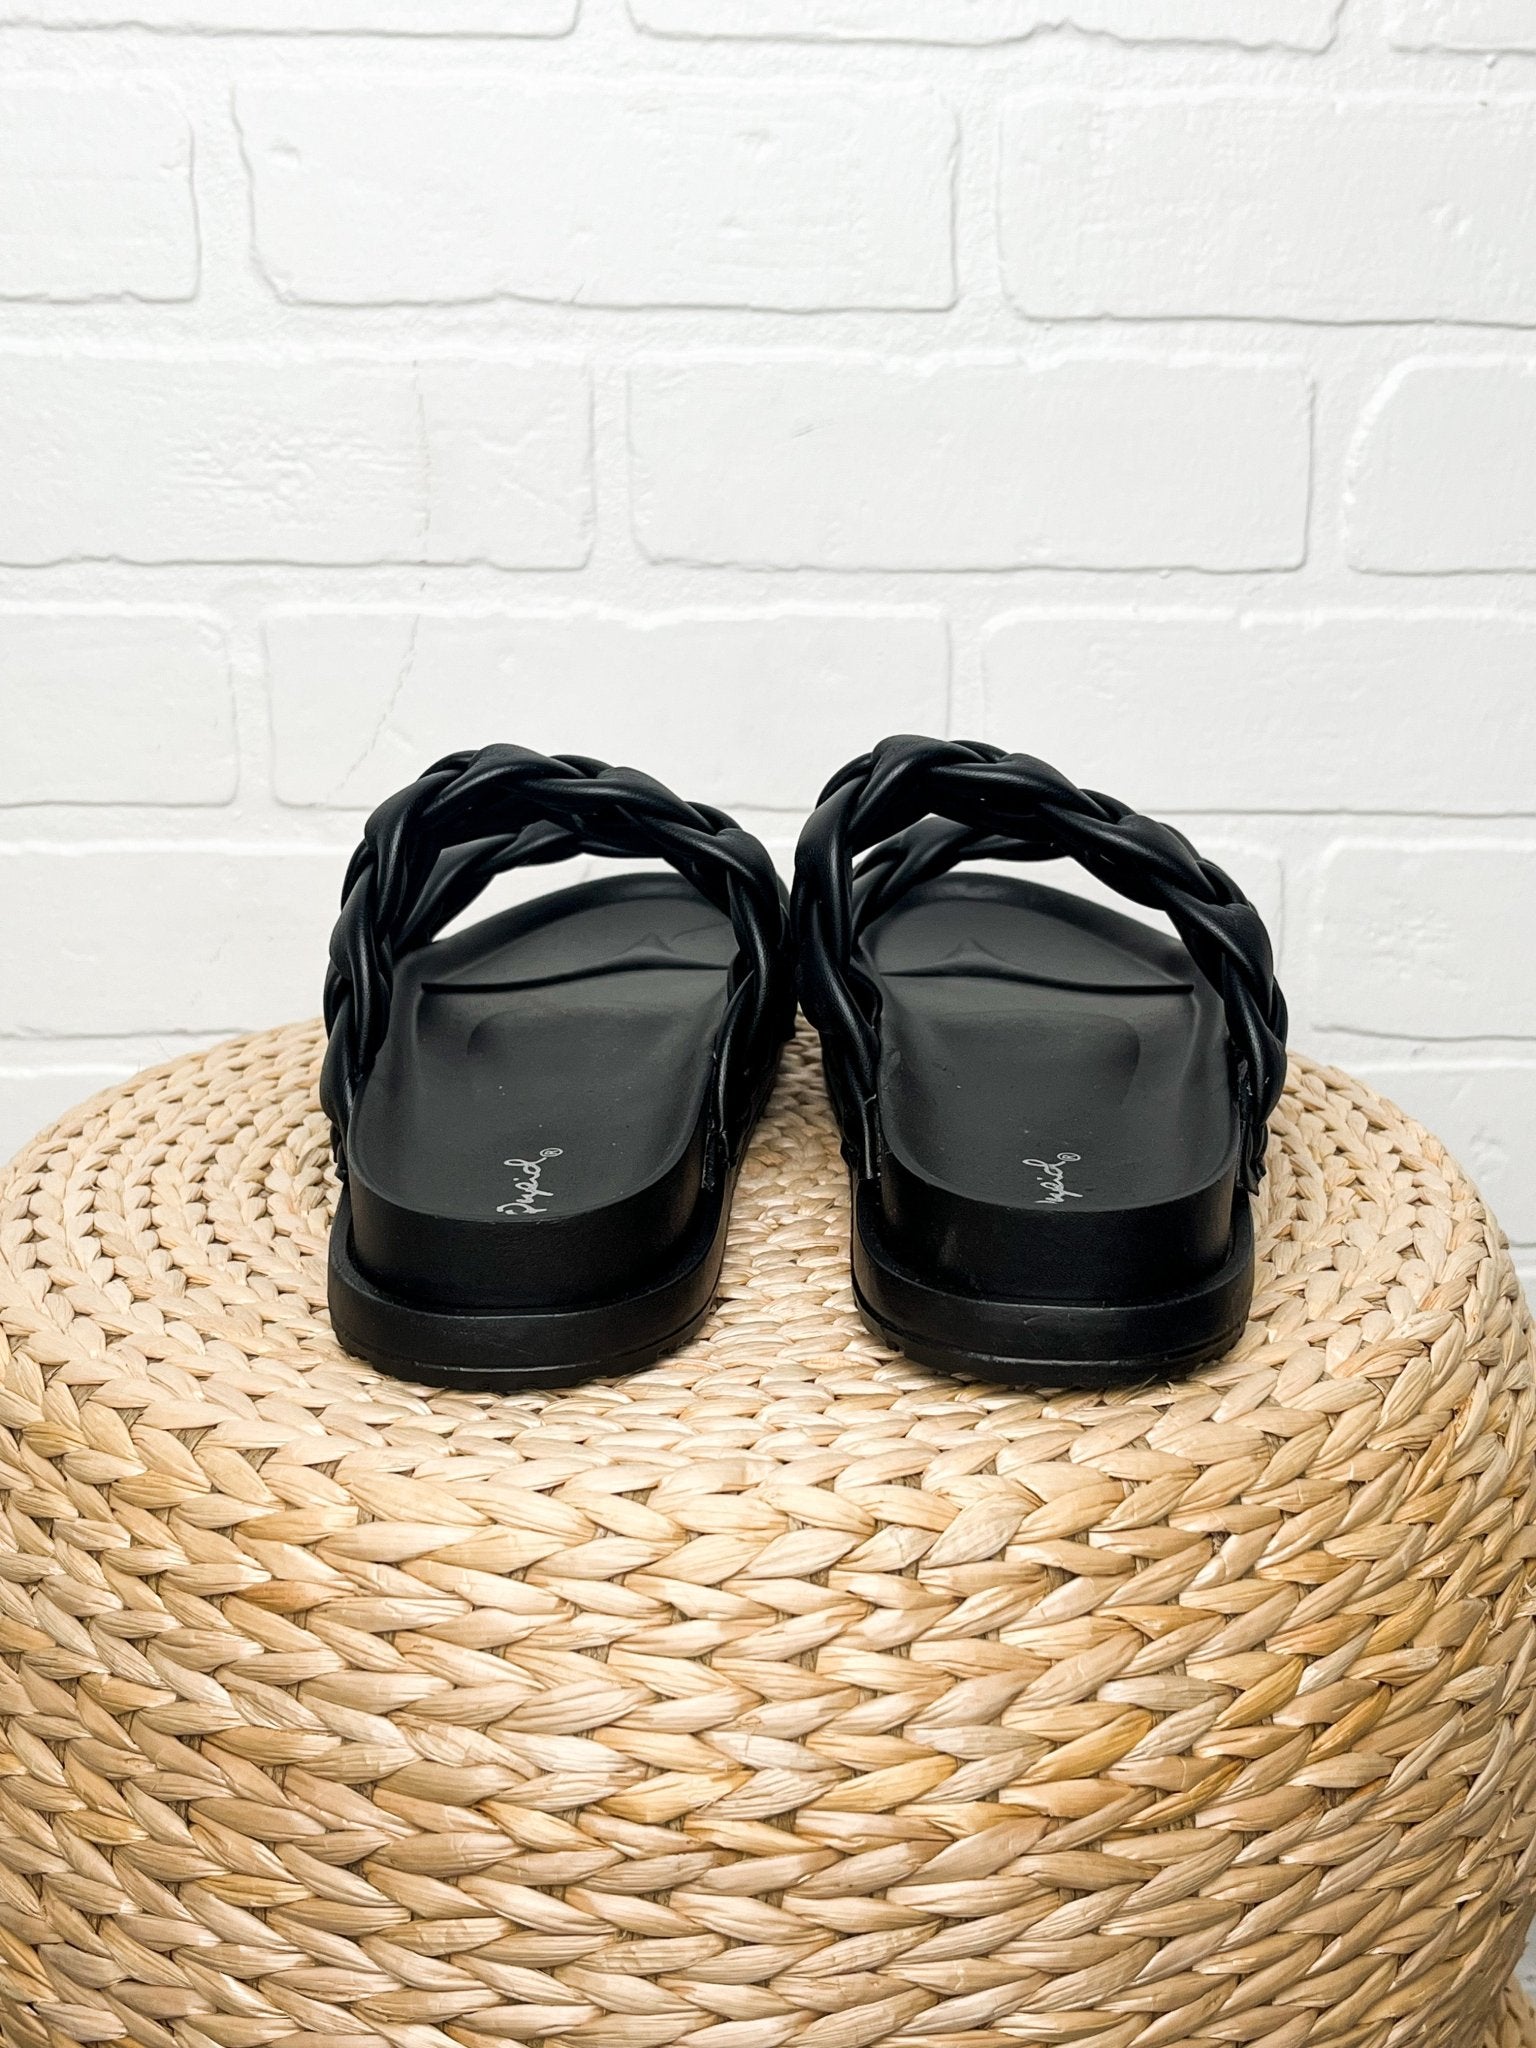 Albina braided sandal black Stylish shoes - Womens Fashion Shoes at Lush Fashion Lounge Boutique in Oklahoma City